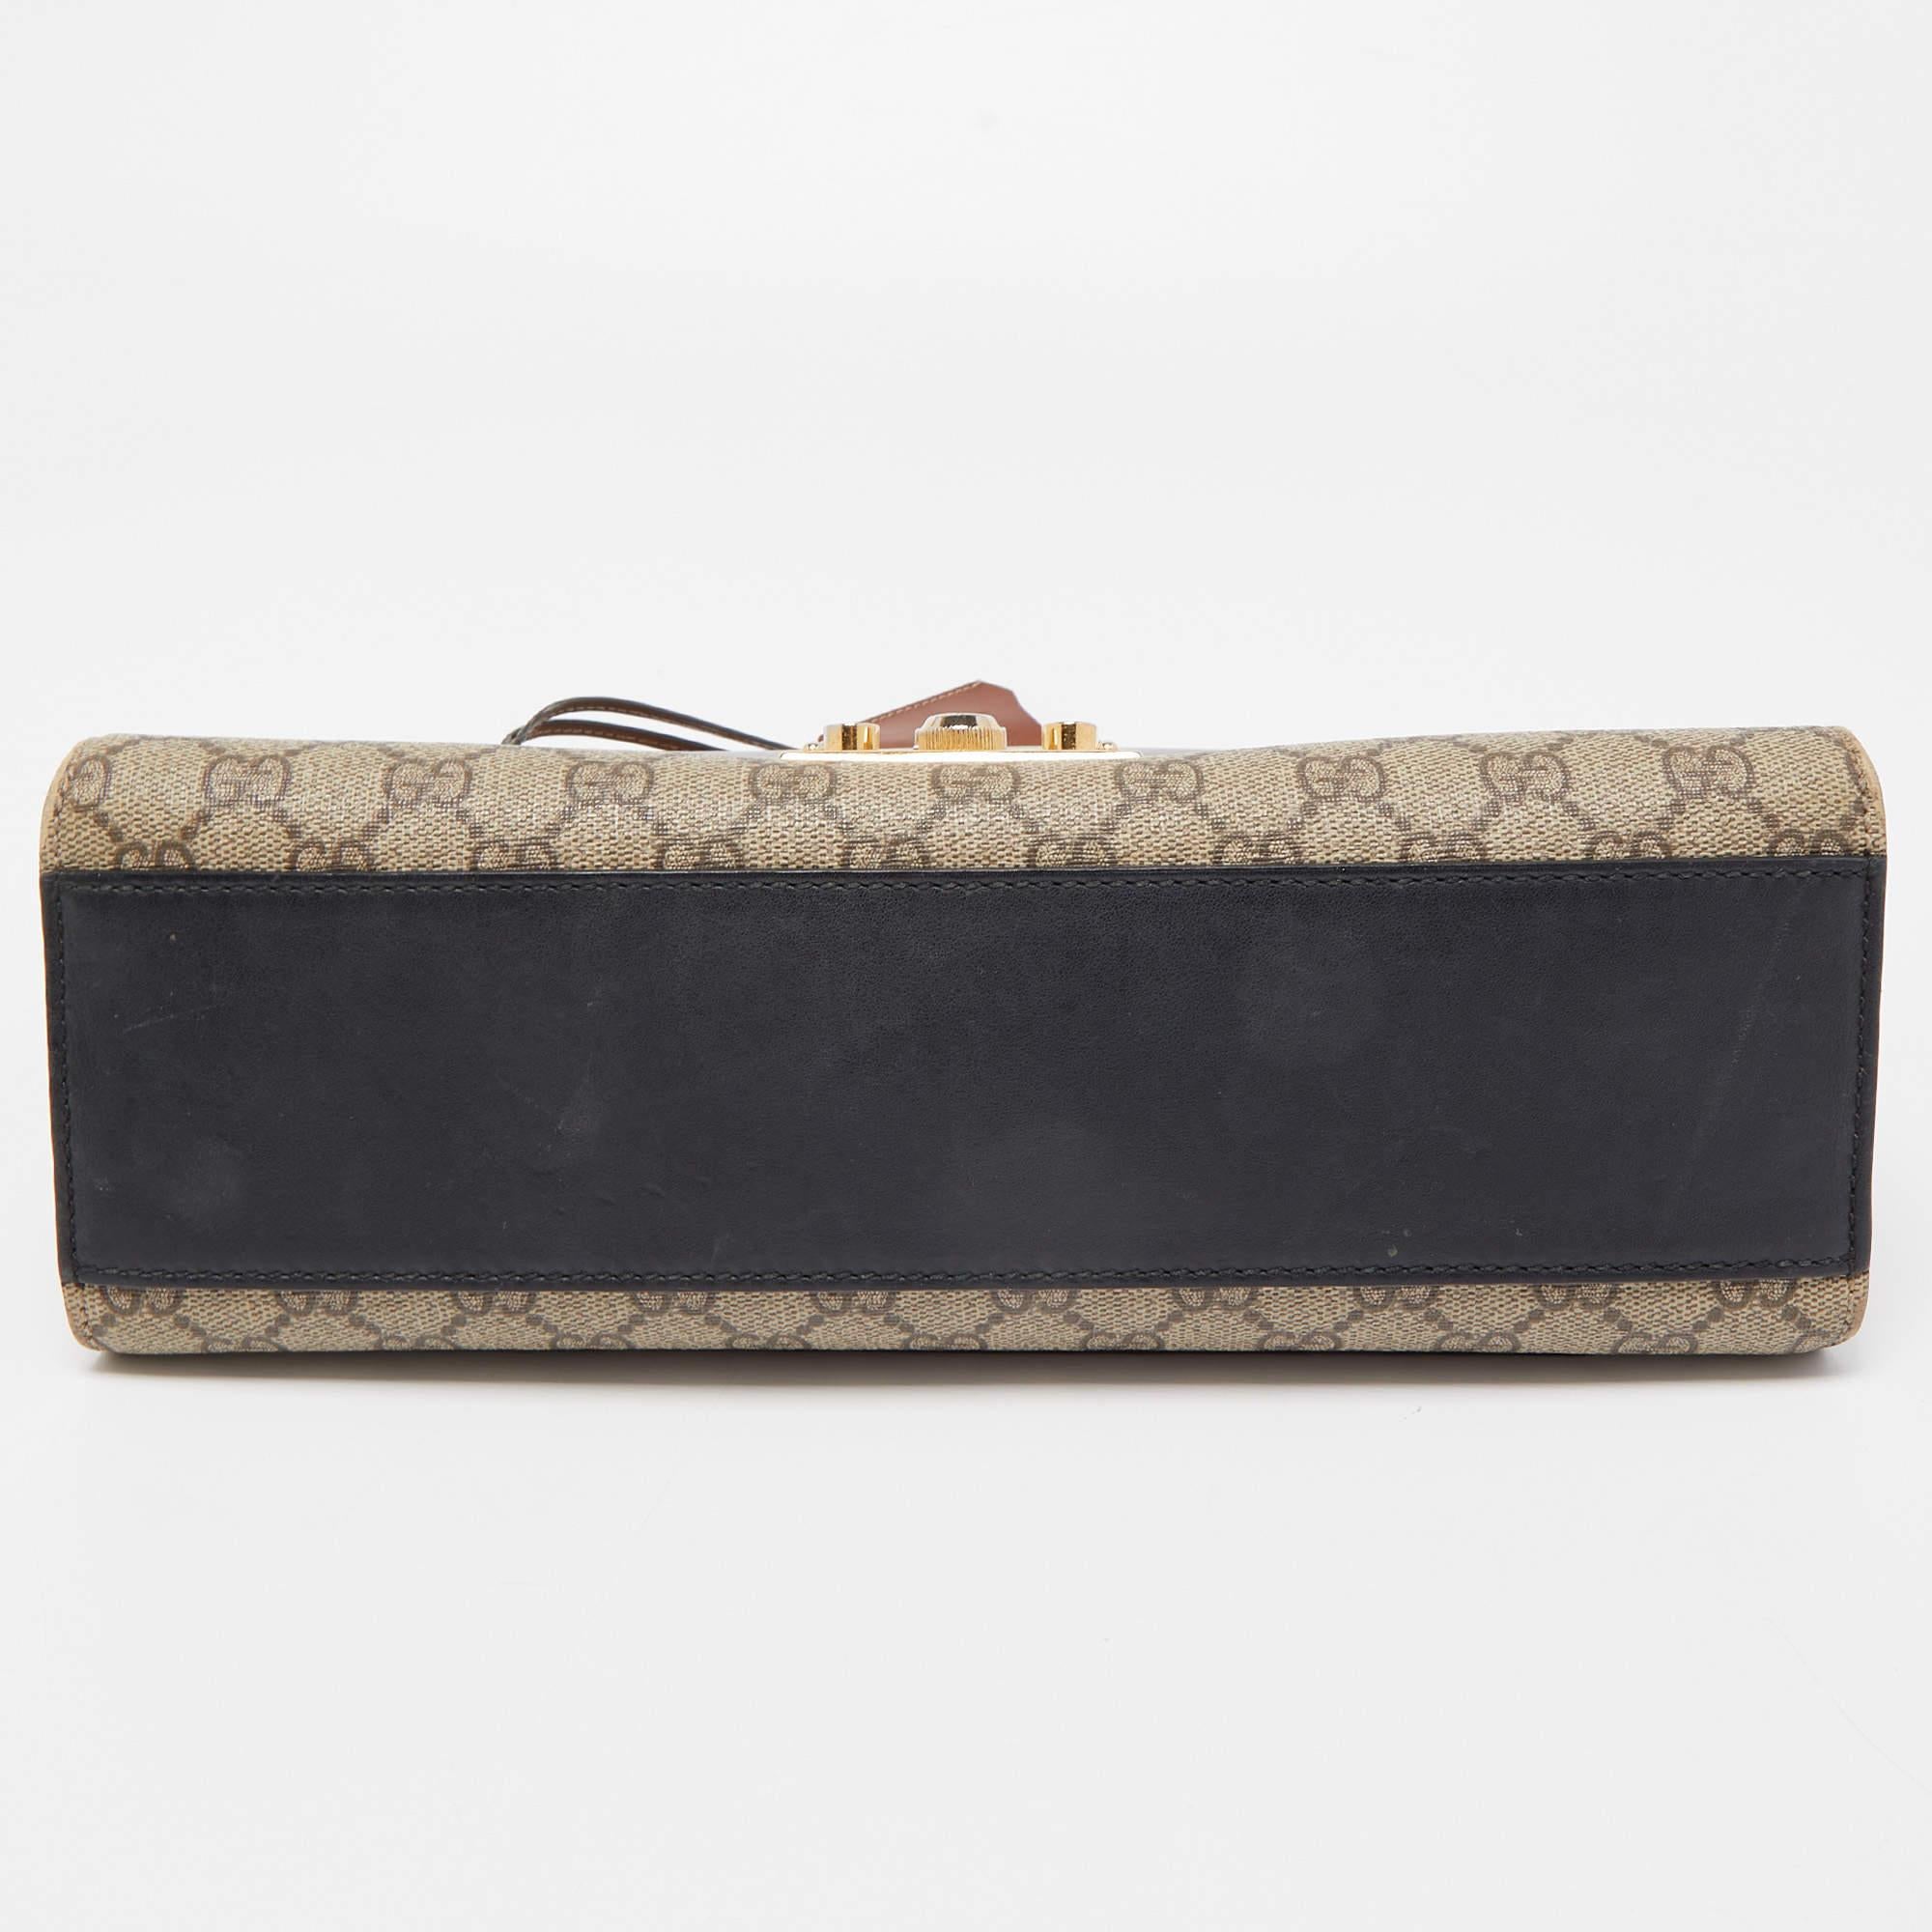 Gucci Black/Brown GG Supreme Canvas and Leather Medium Padlock Shoulder Bag 1